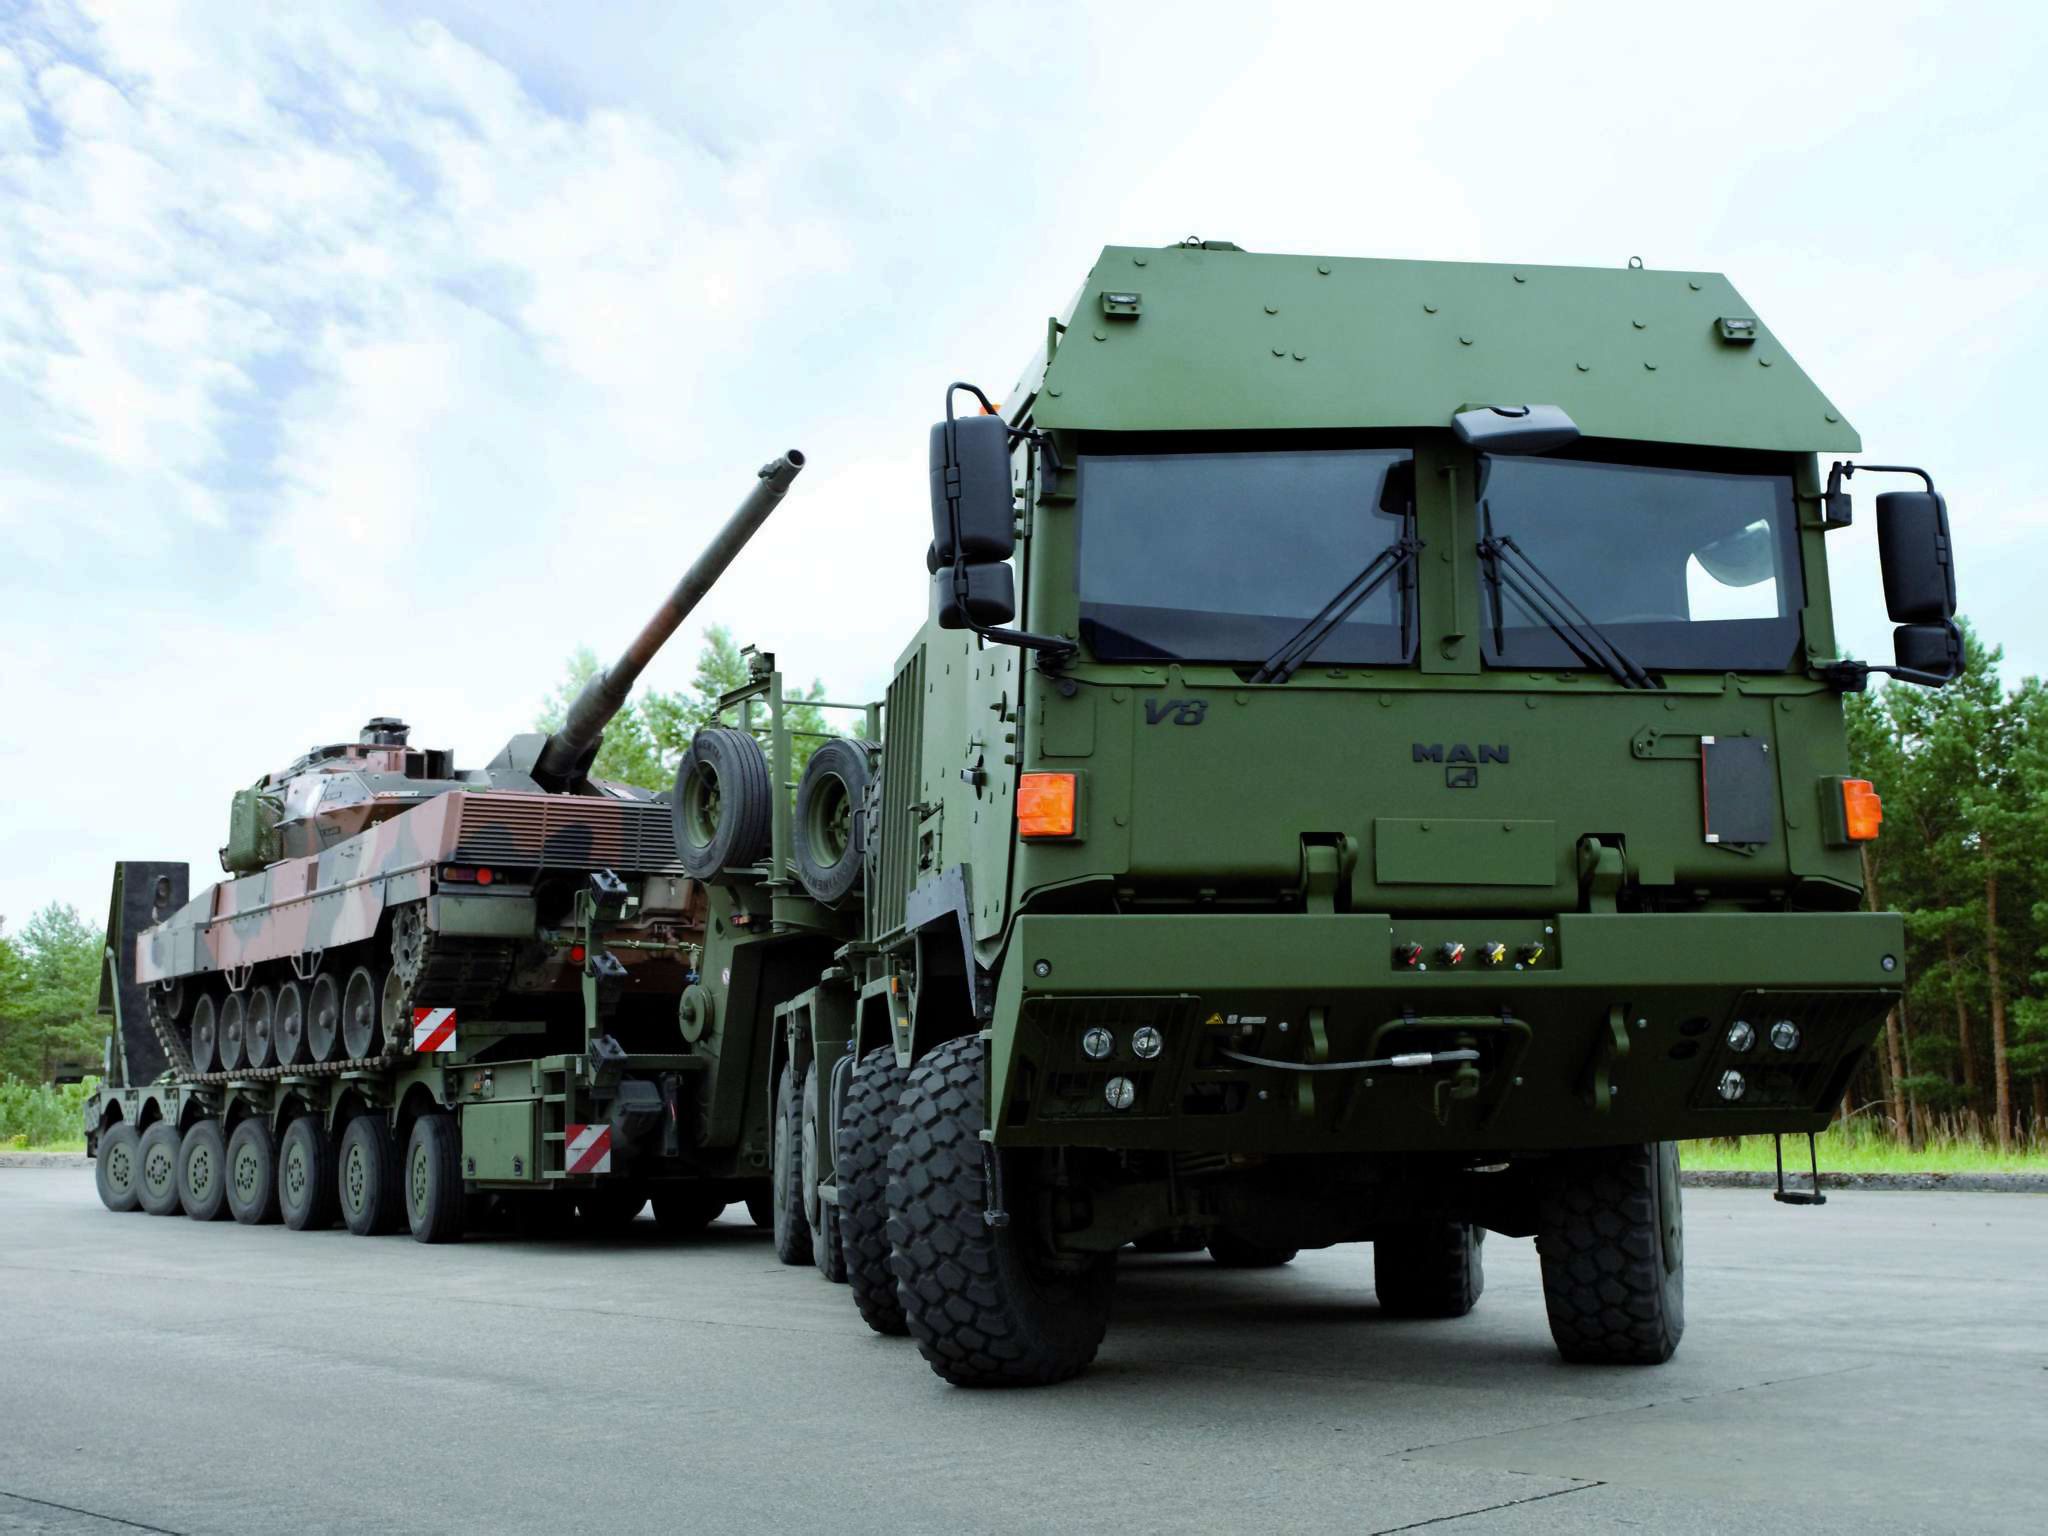 MAN HX 81 RMMV 8x8 Tractor Truck Trucks Semi Military Tank Image. Military Vehicles, Army Vehicles, Military